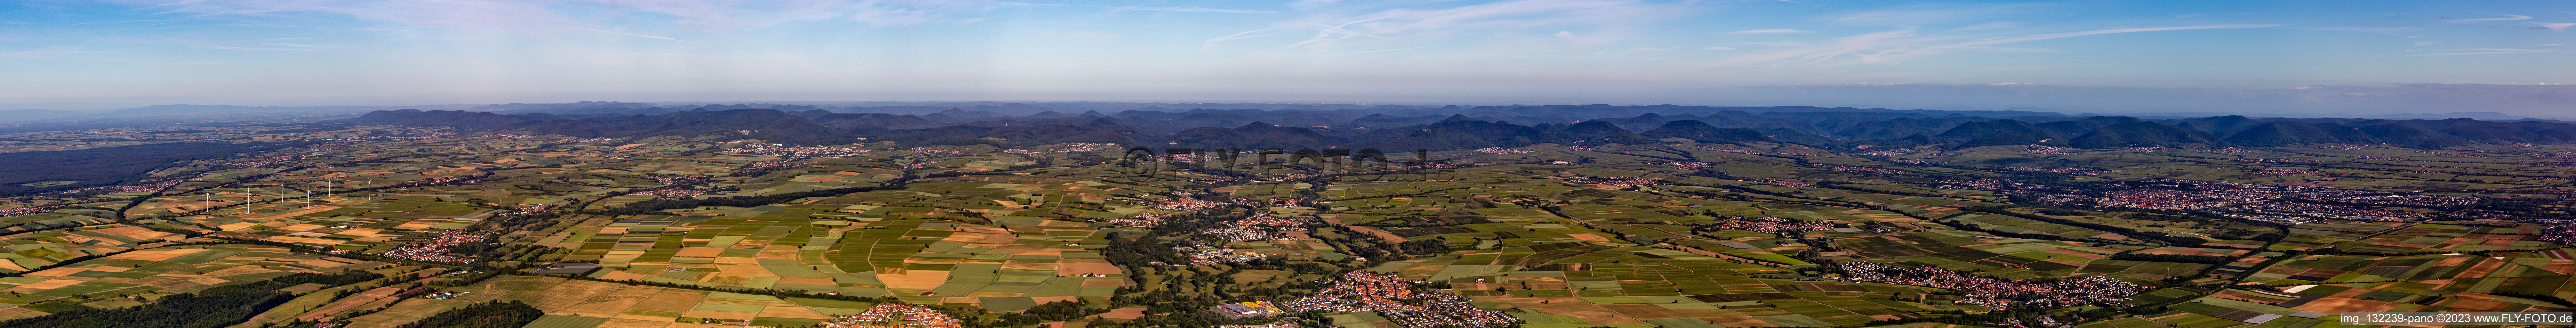 Southern Palatinate panorama from Bienwald to Landau in Steinweiler in the state Rhineland-Palatinate, Germany